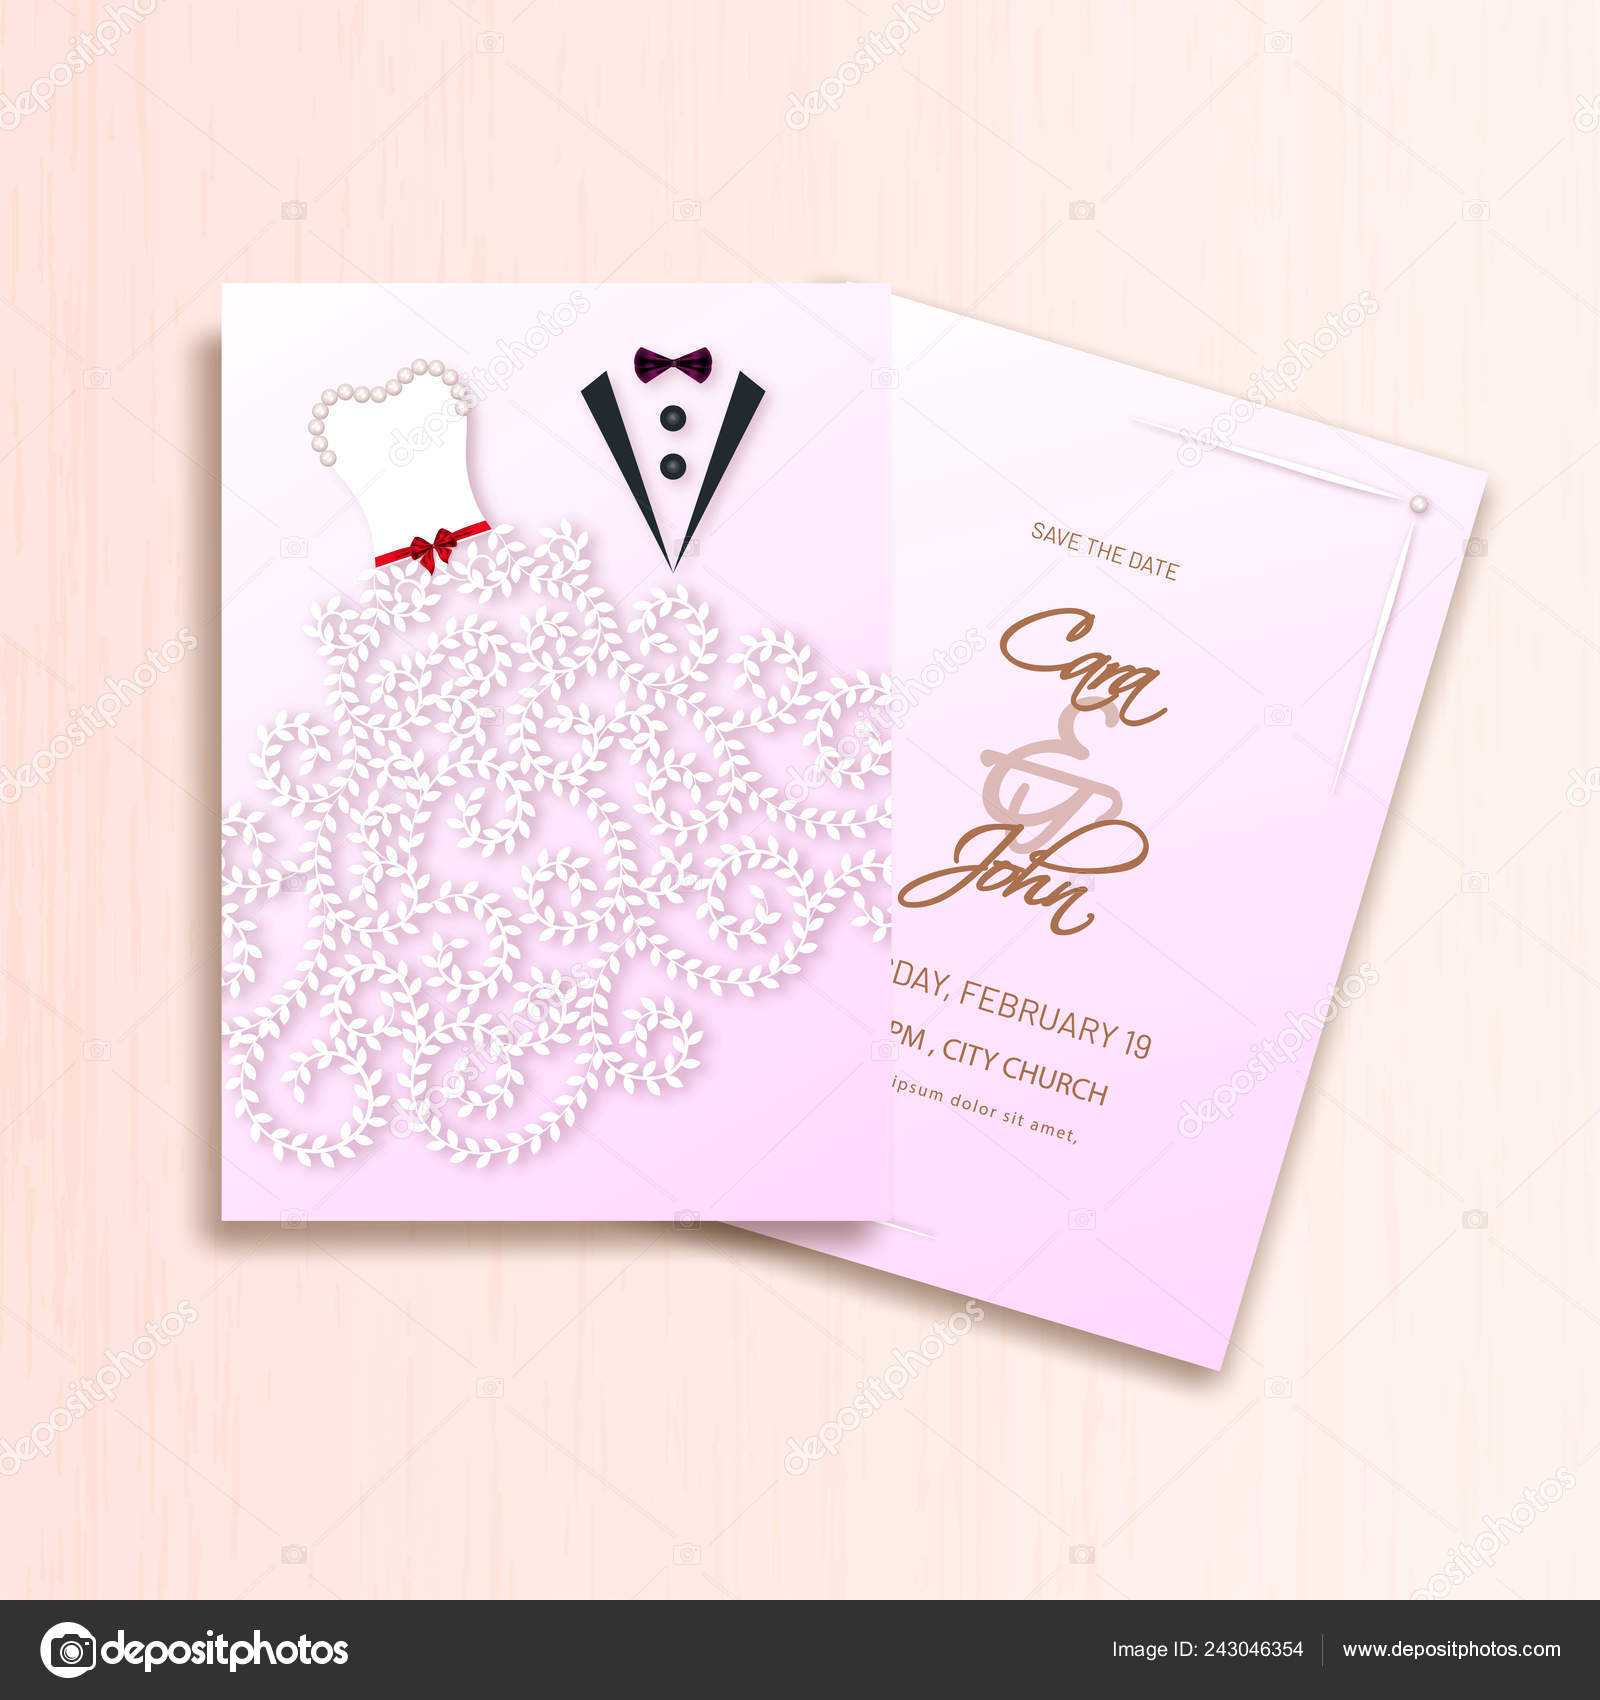 Creative Wedding Invitation Card Template Design Groom Bride With Regard To Church Wedding Invitation Card Template